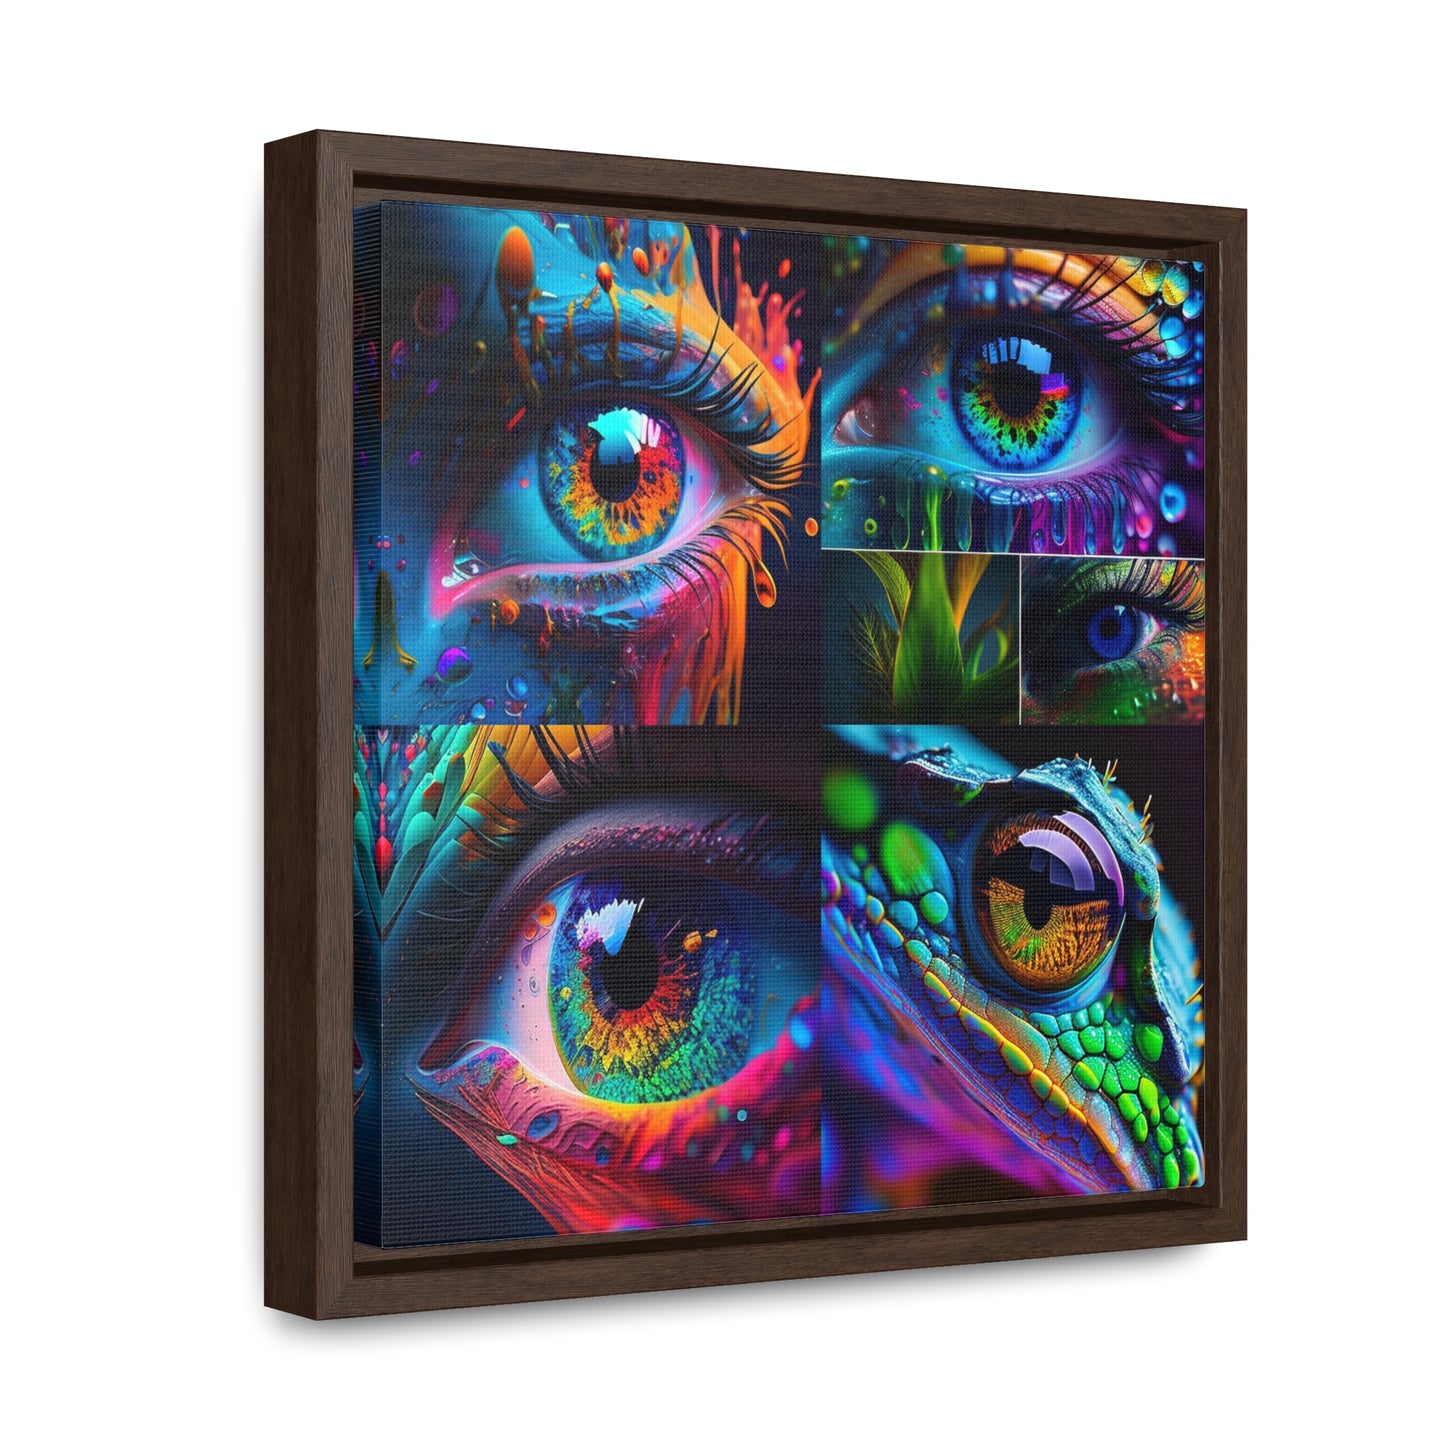 Gallery Canvas Wraps, Square Frame Macro Eye Photo 5